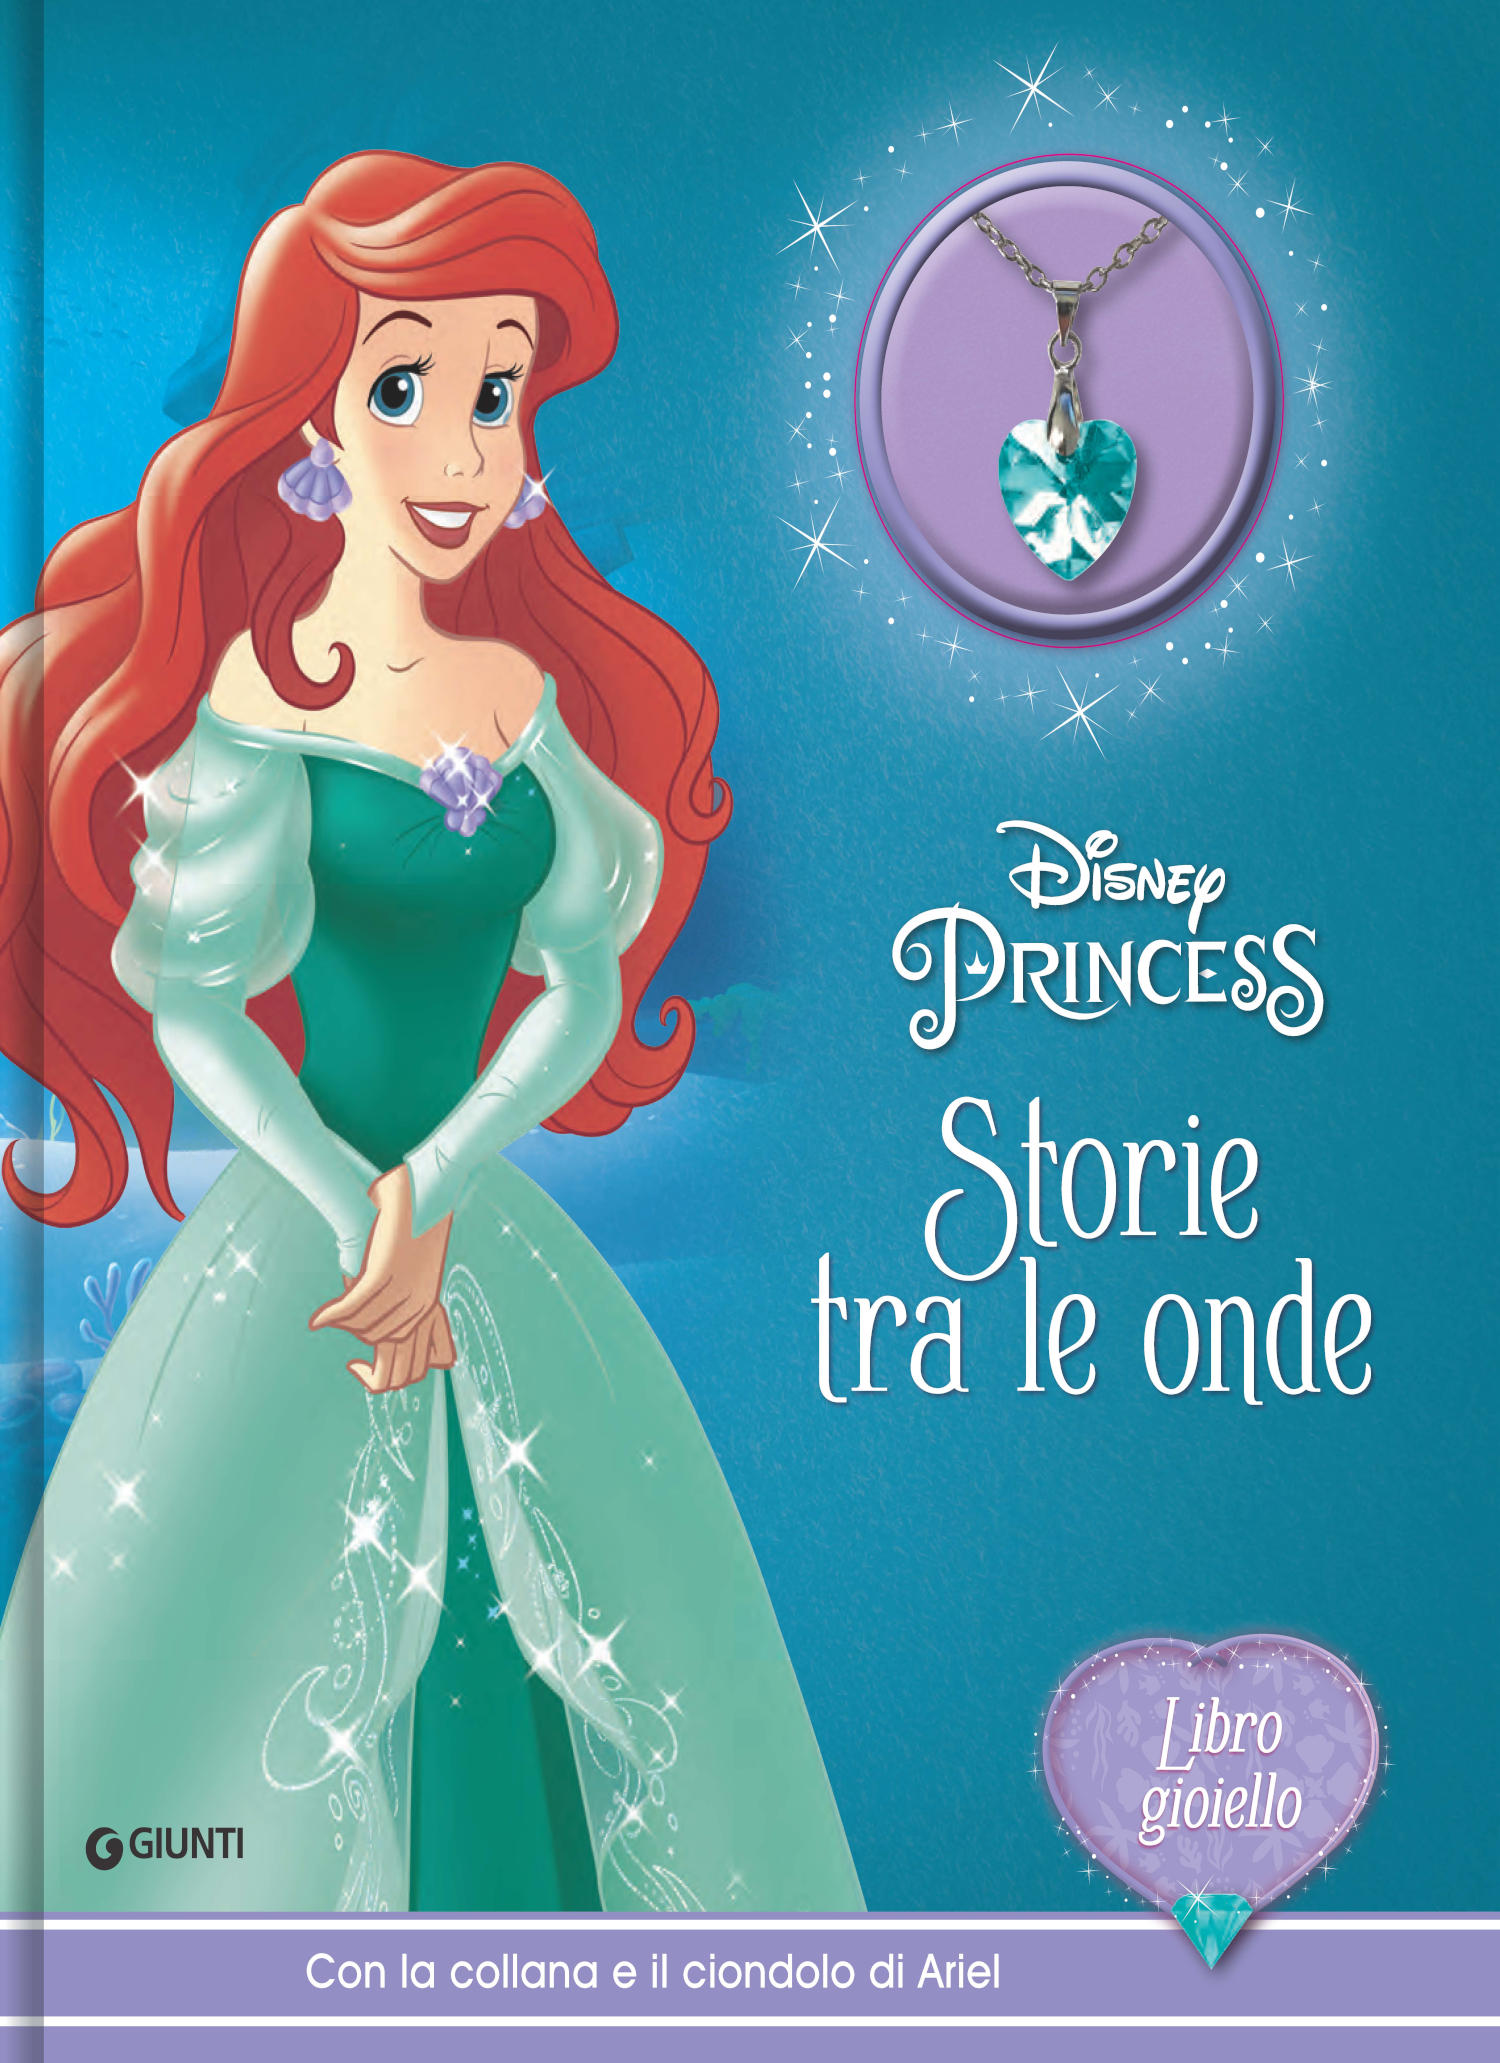 Disney Princess Storie tra le onde